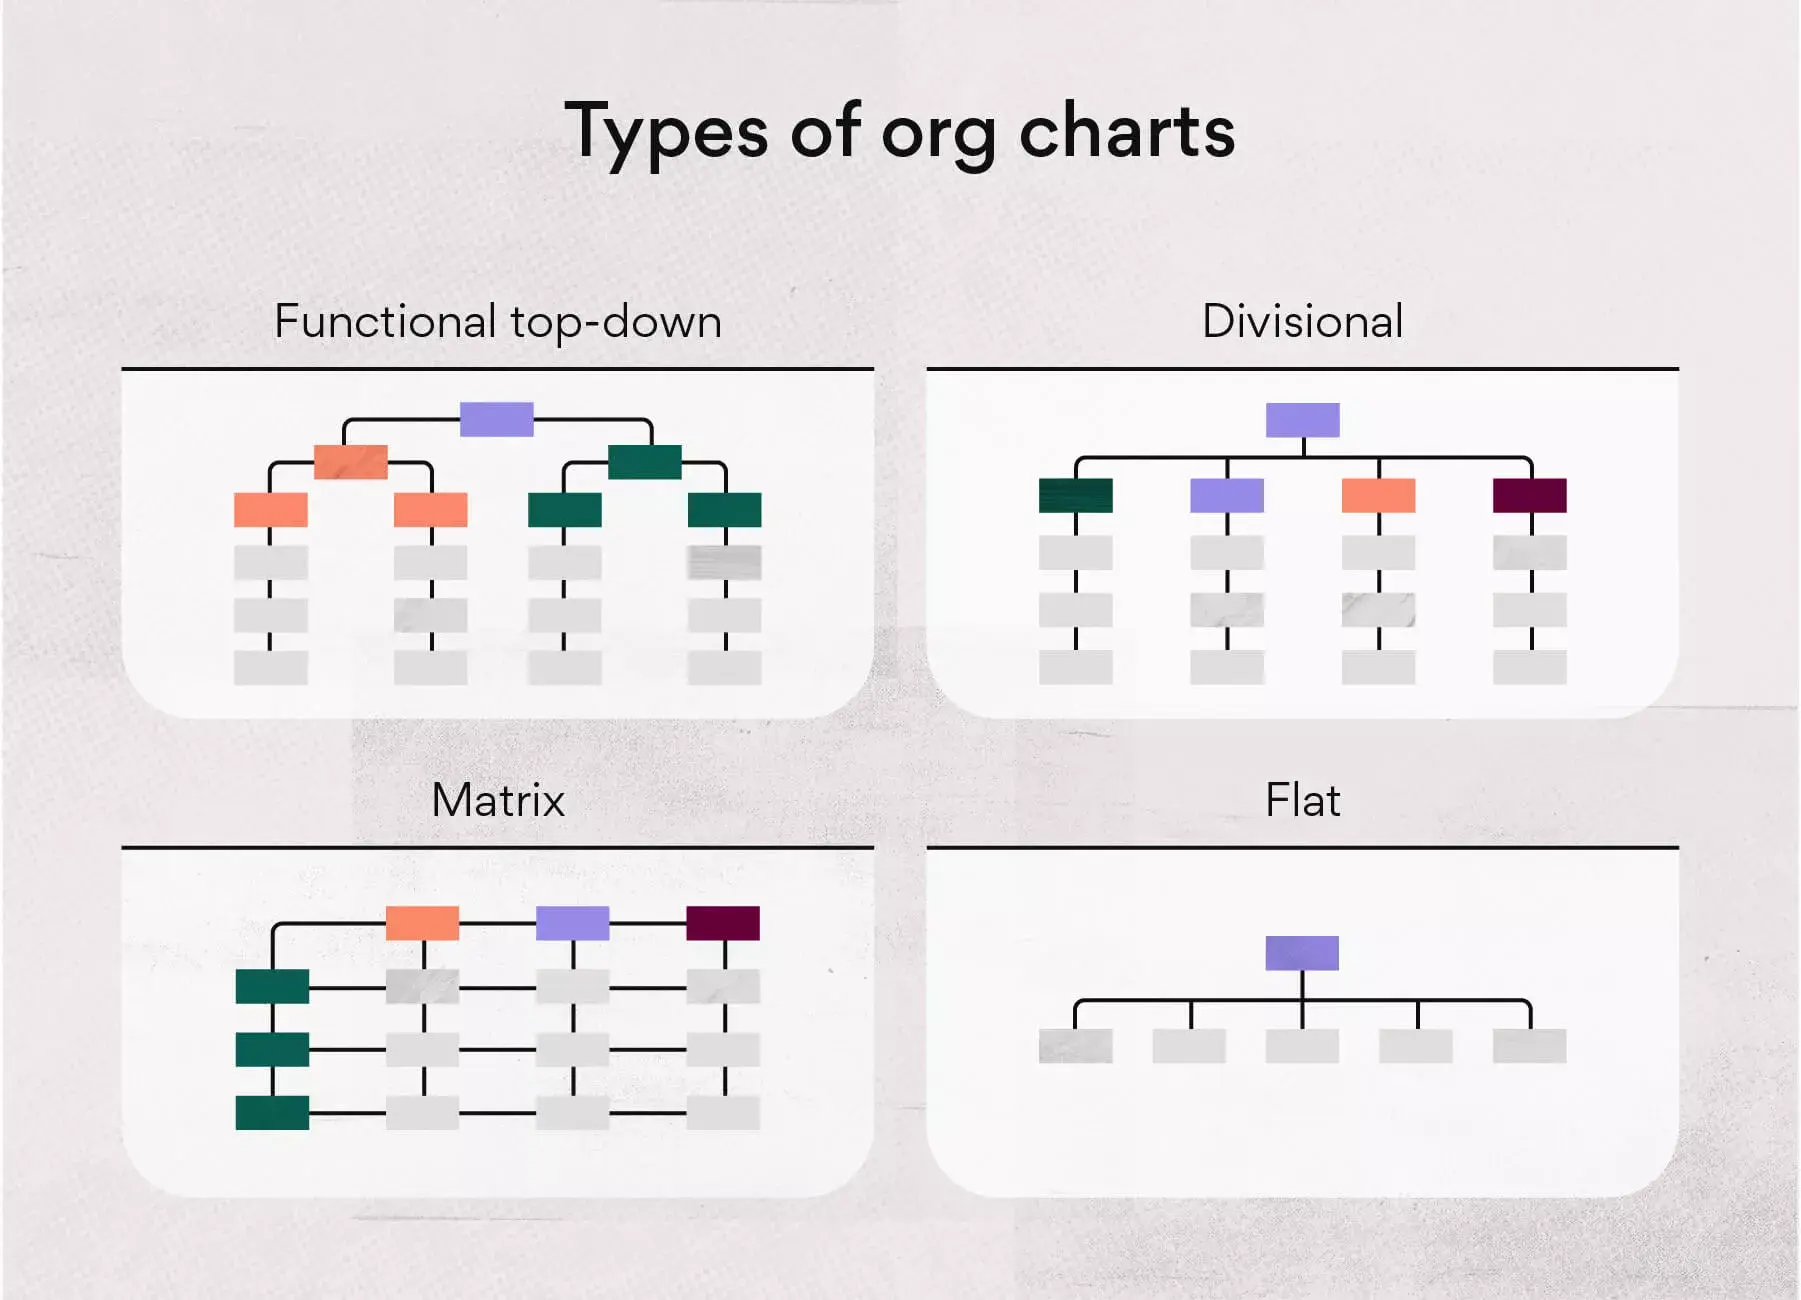 Types of organizational charts